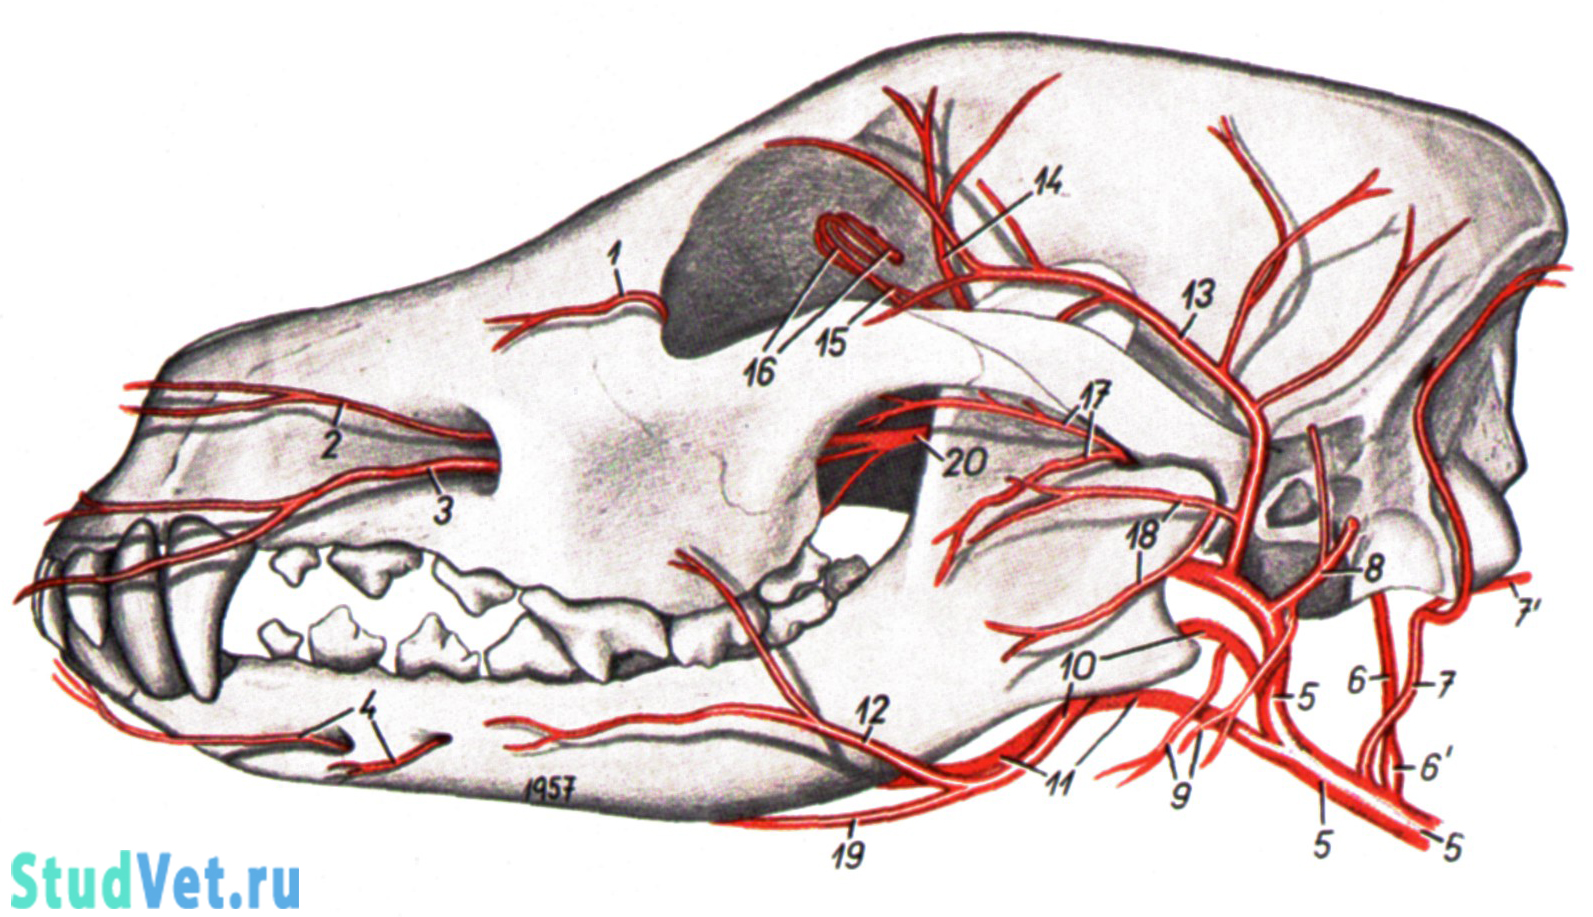 Скелетотопия артерий головы собаки. Вид слева. Рисунок сделан по коррозионному препарату